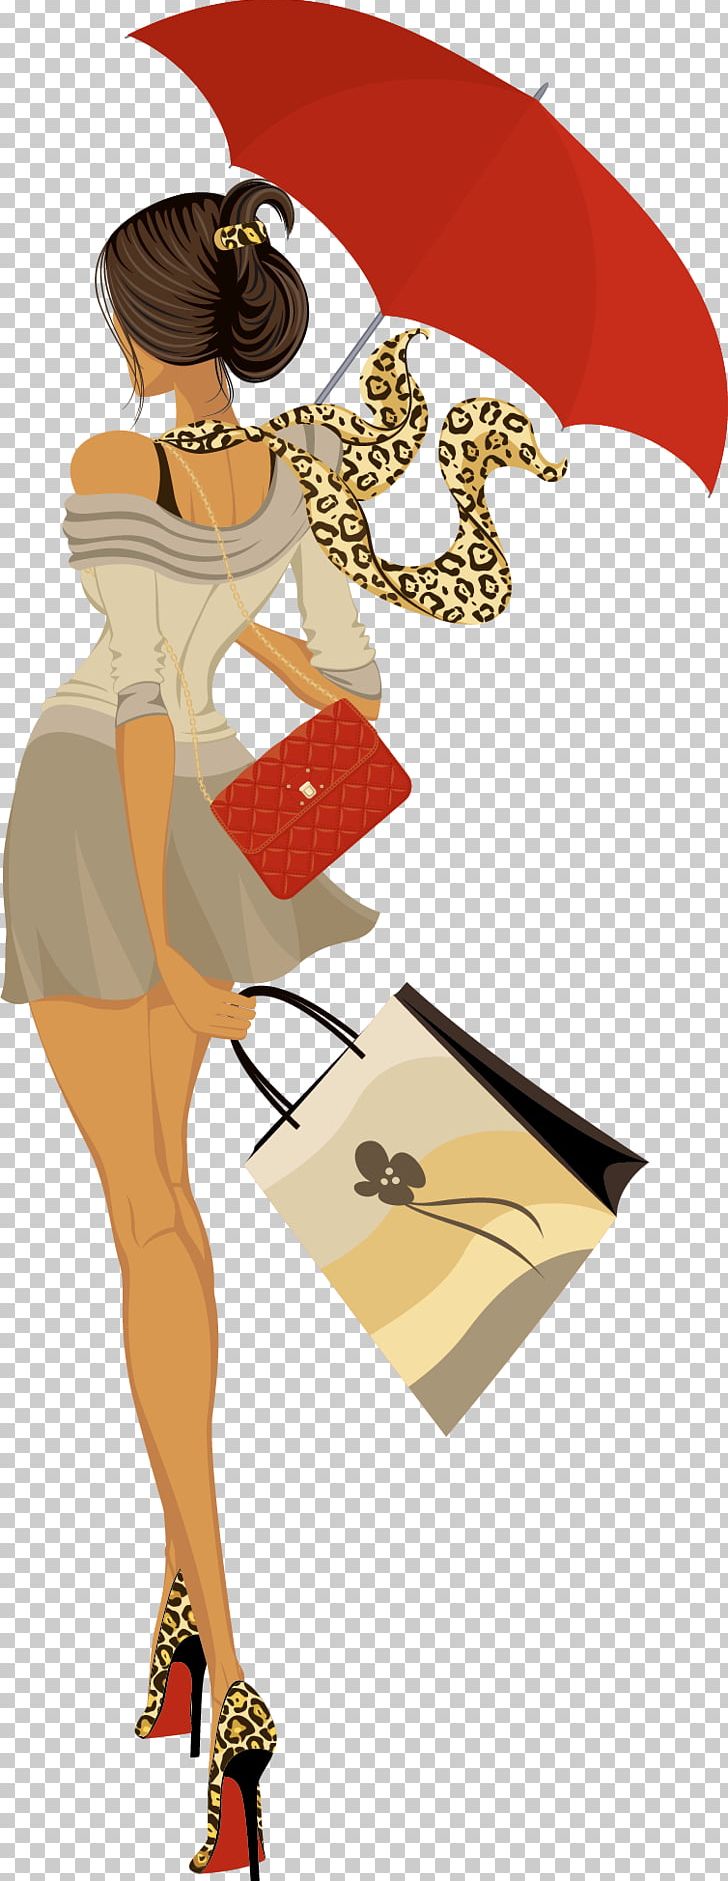 Shopping Bag Drawing Illustration PNG, Clipart, Bag, Business Man, Cartoon, Cartoon Model, Clothing Free PNG Download